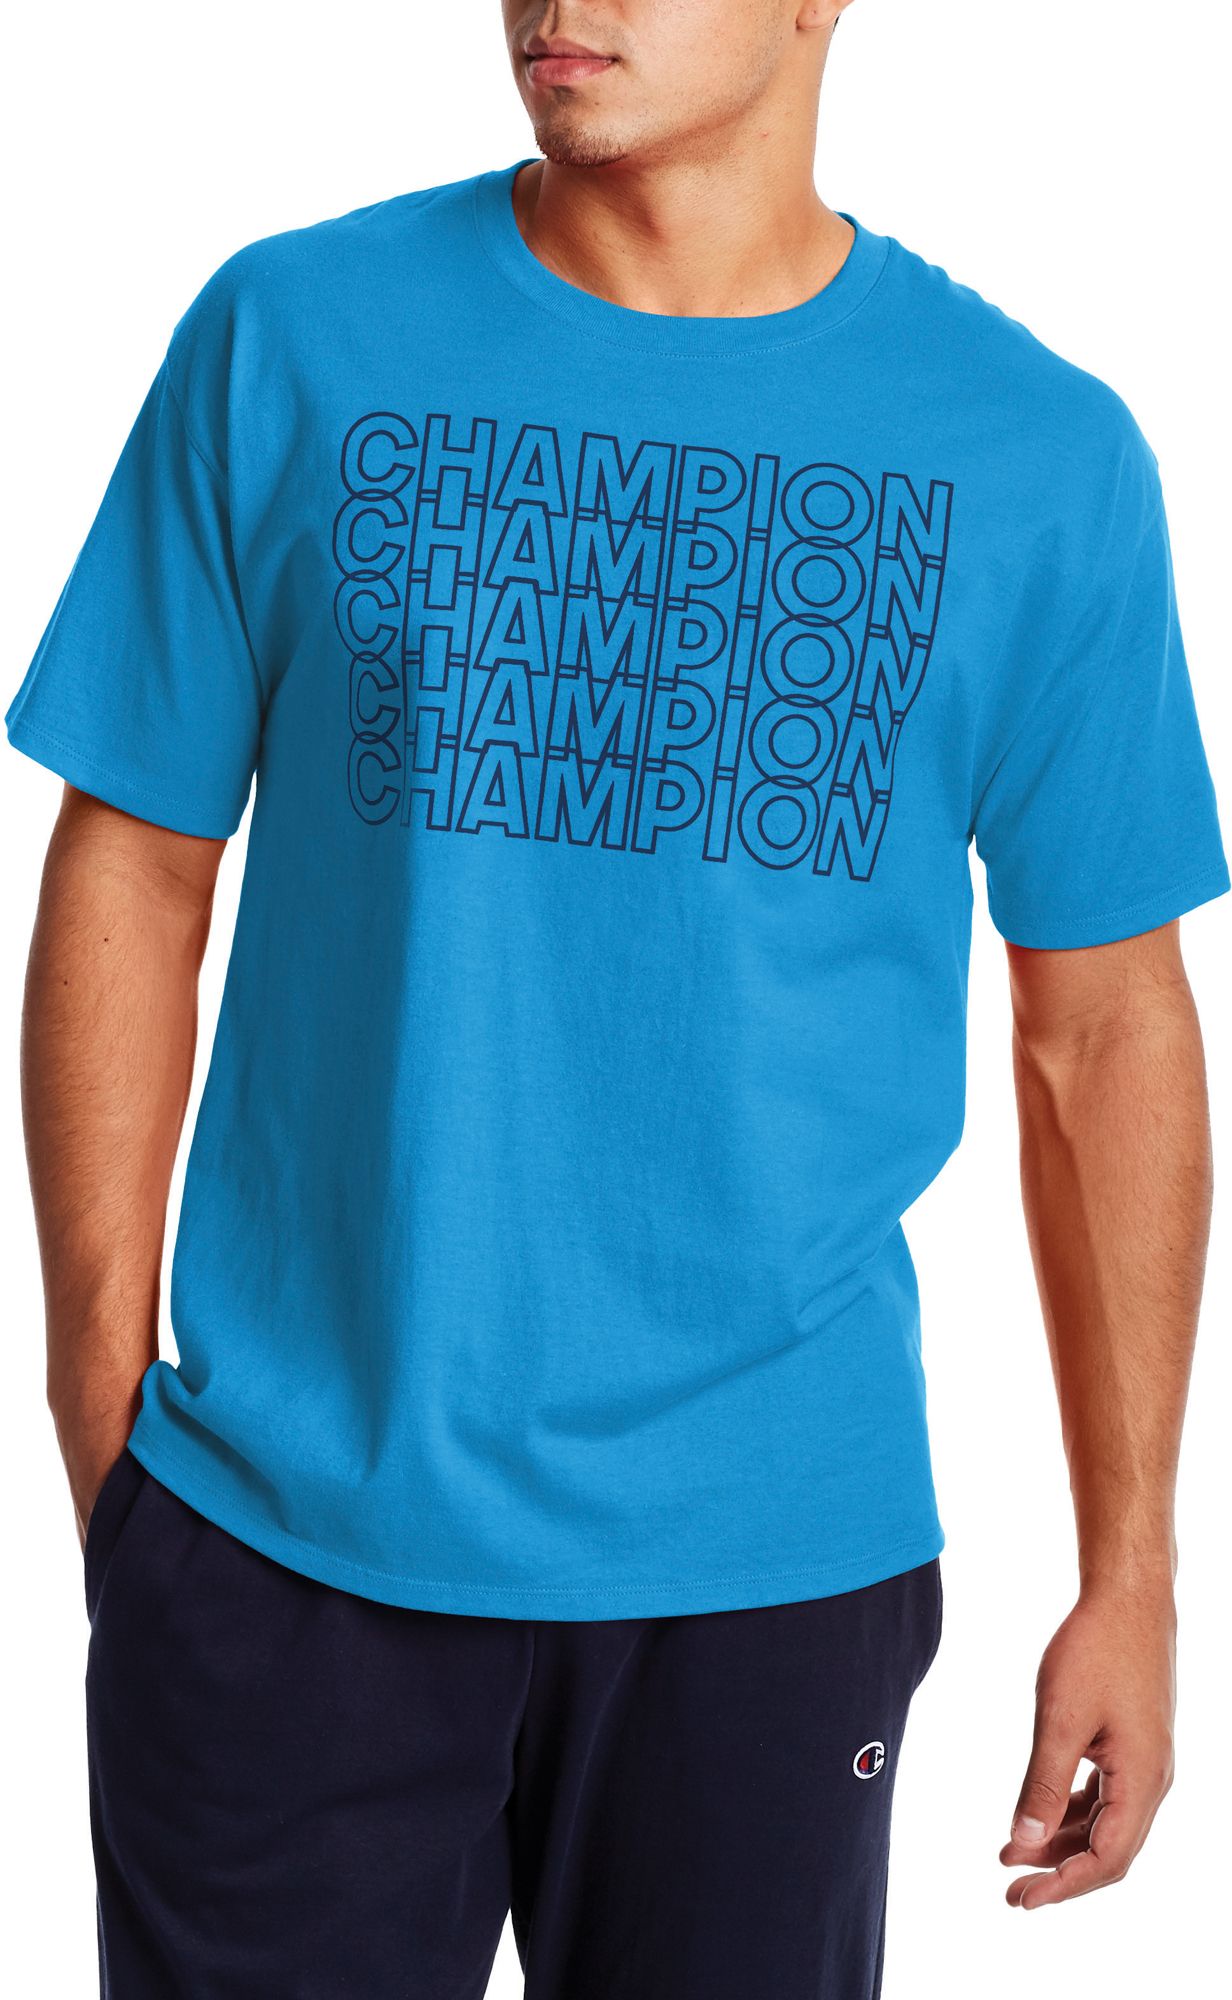 teal champion shirt